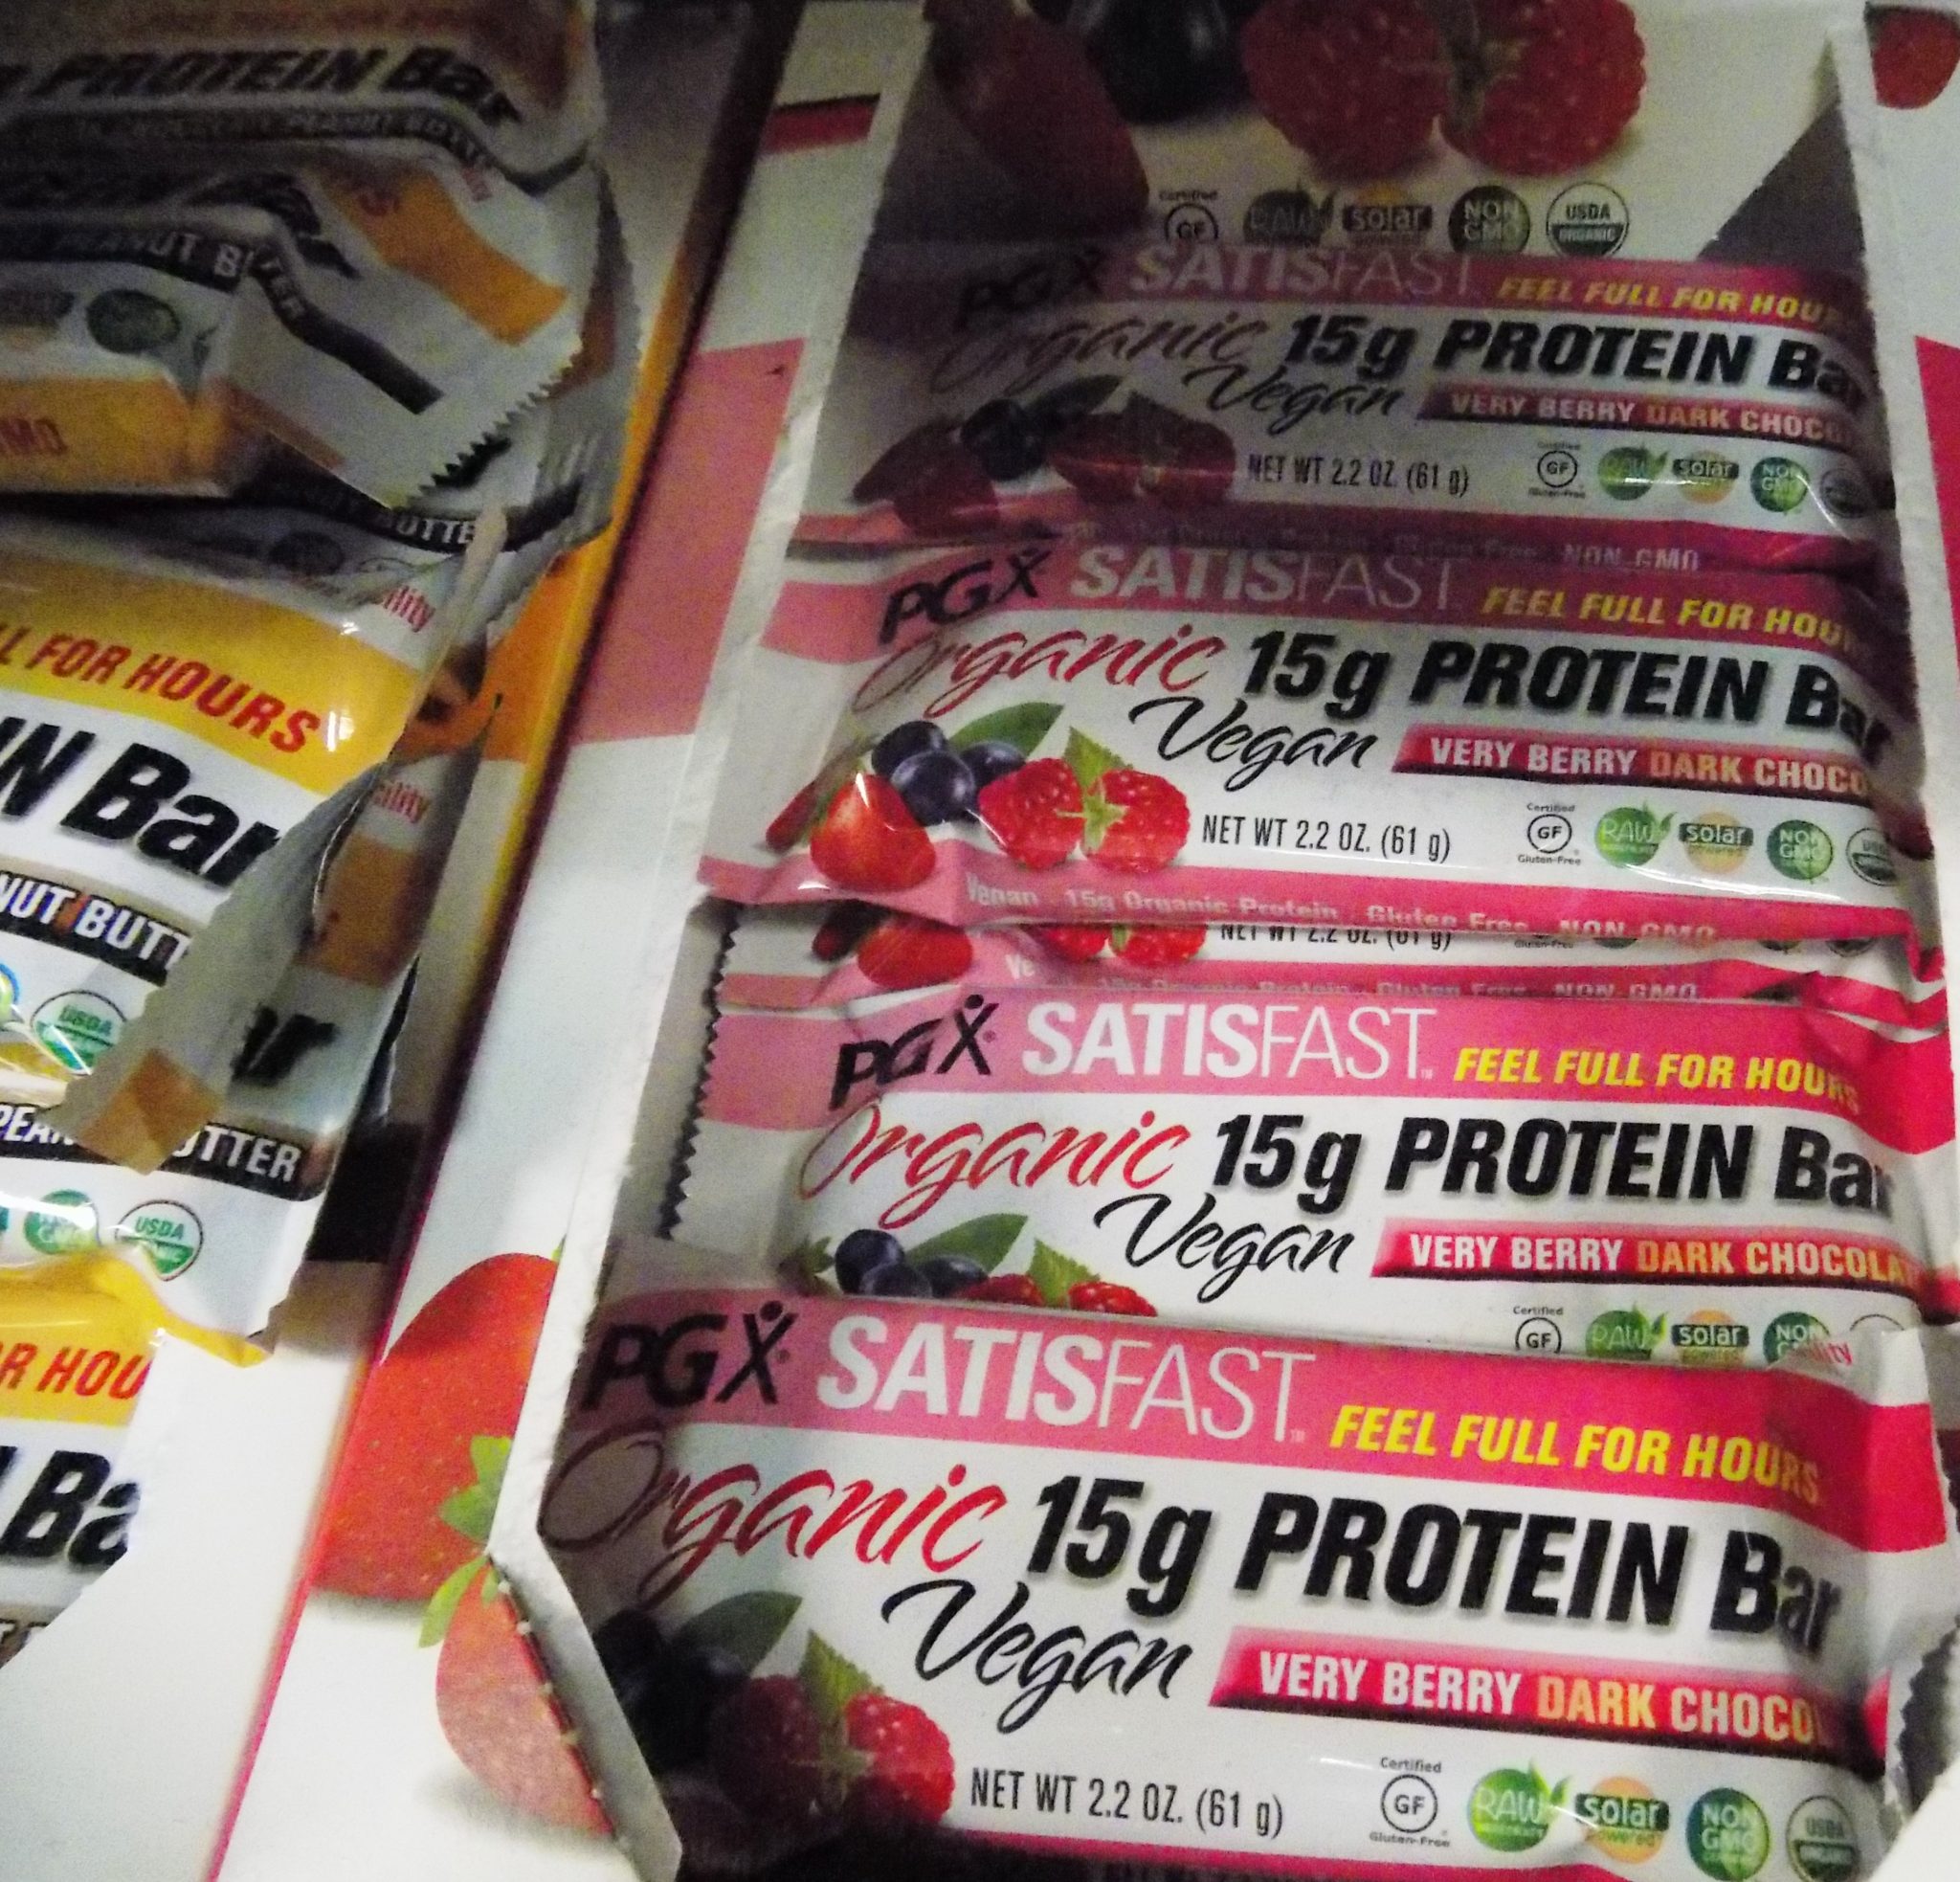 PG X Satisfast Vegan Protein Bars